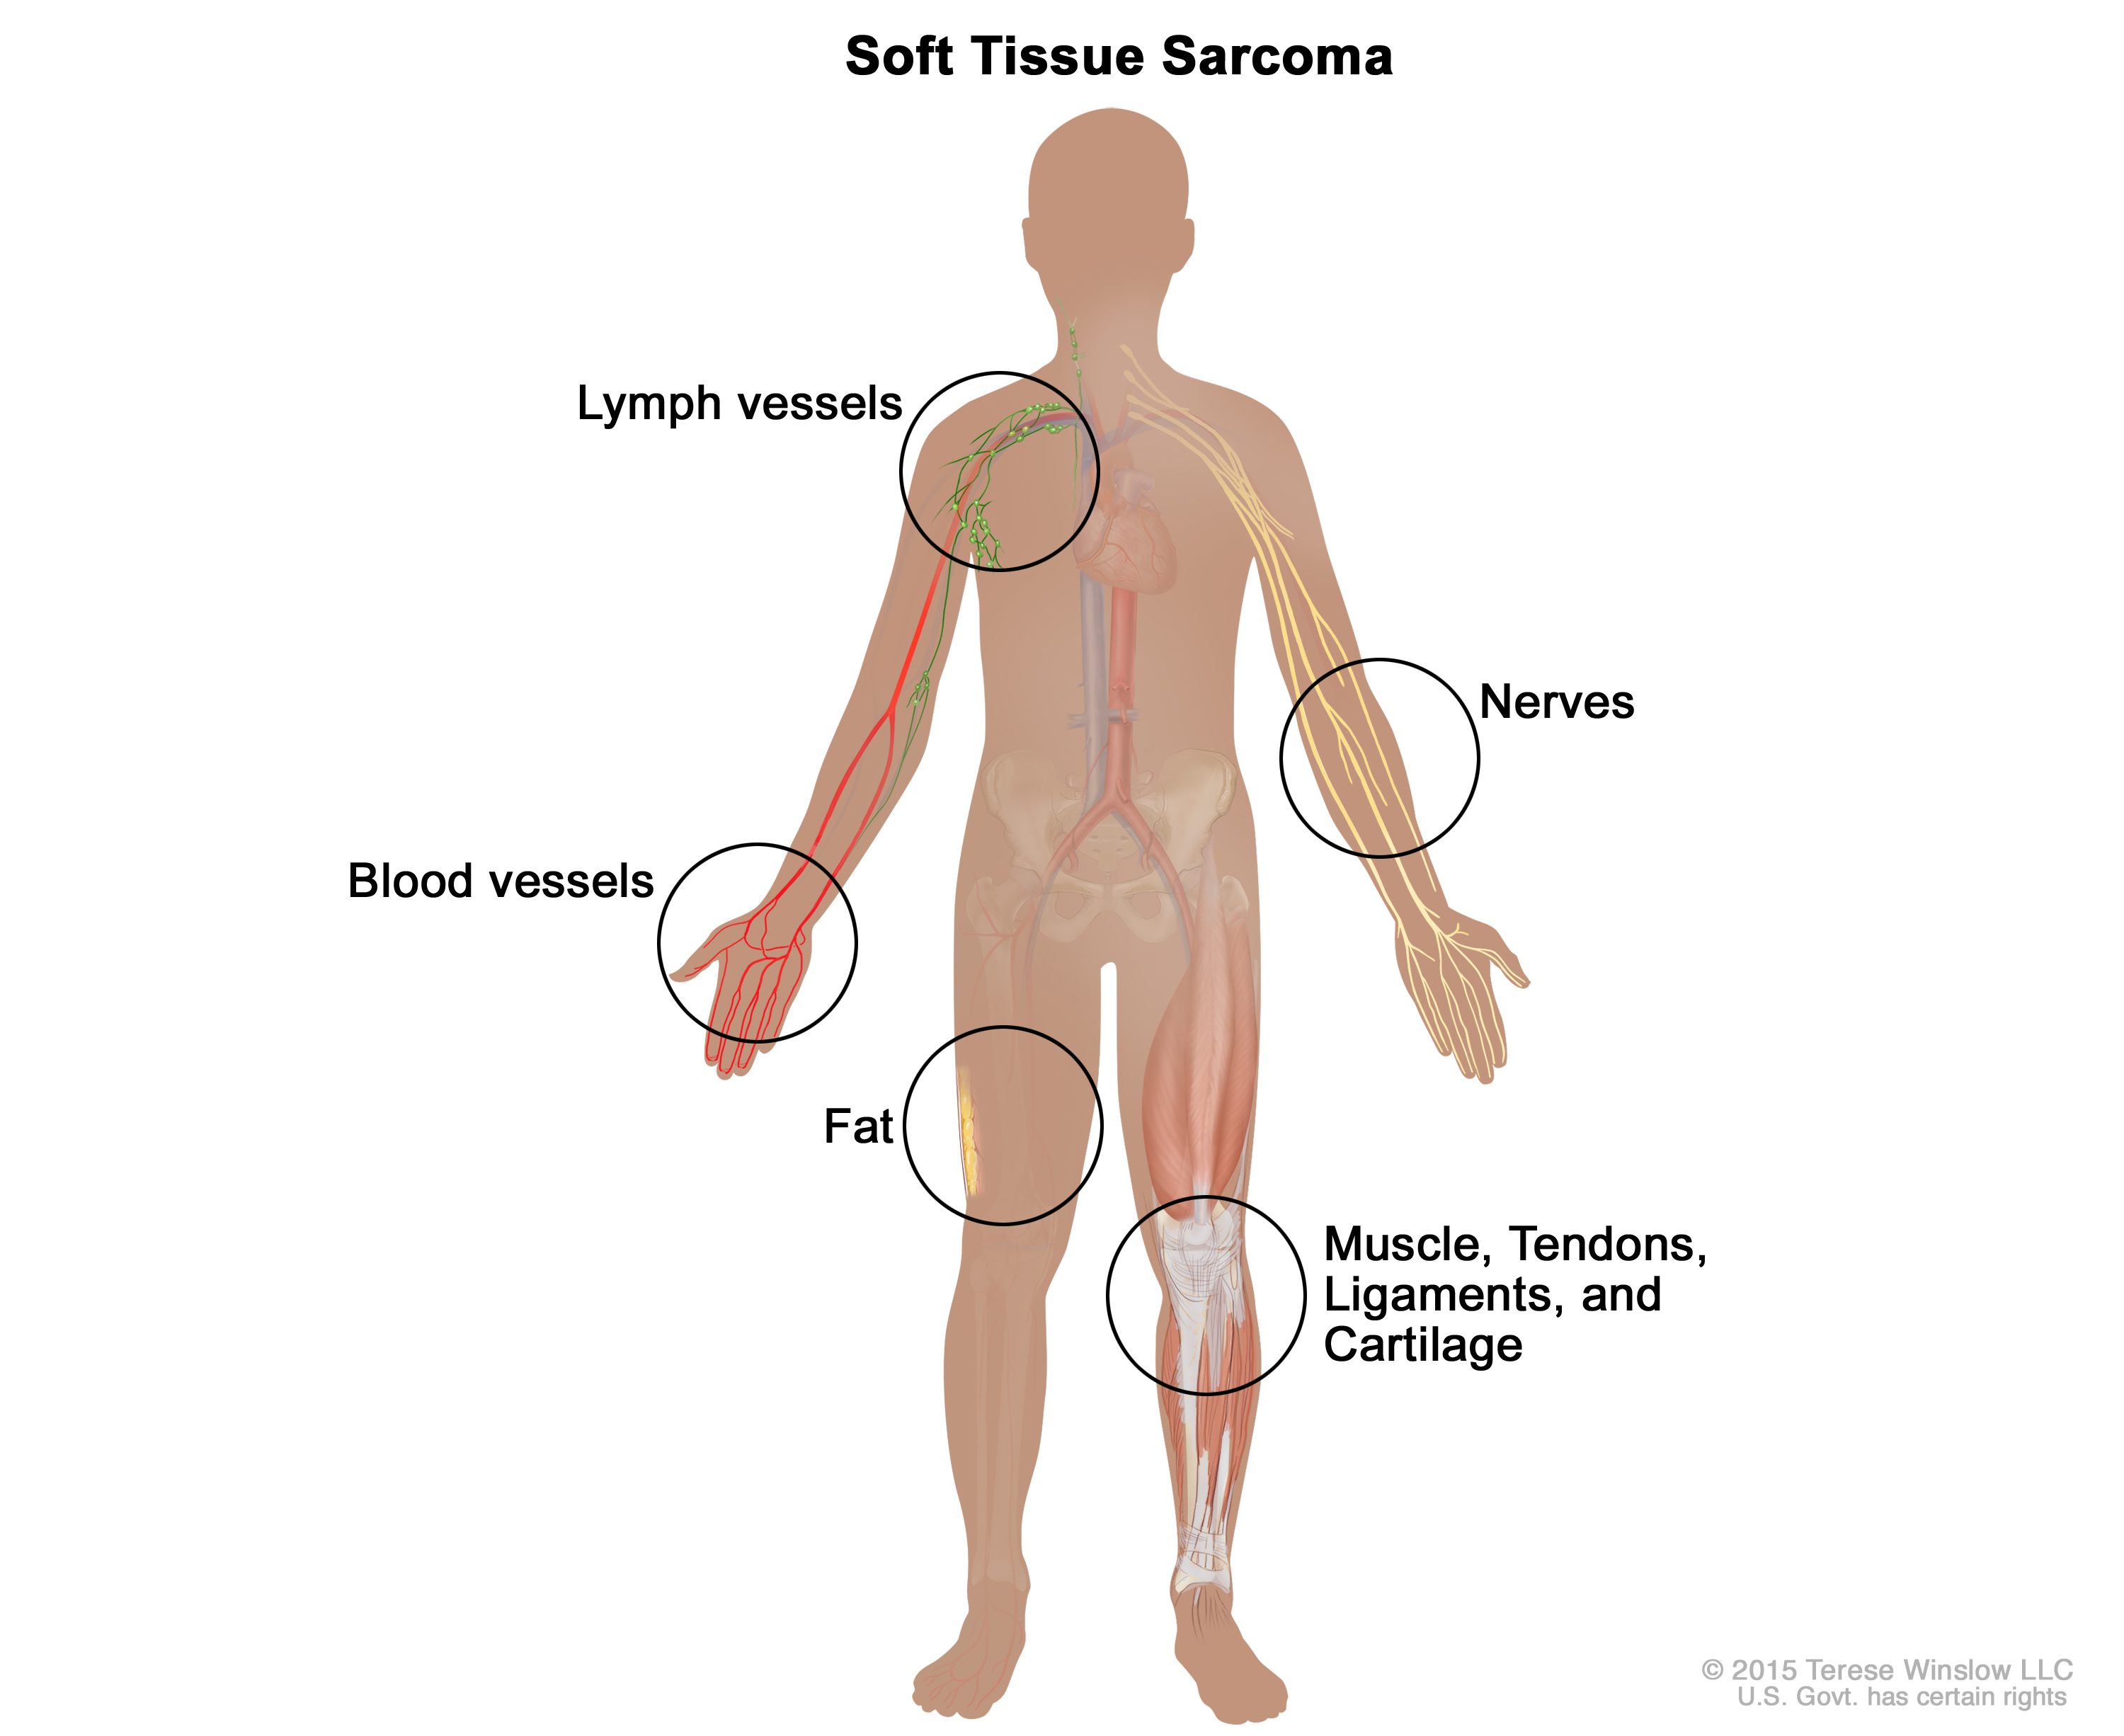 Soft tissue sarcoma